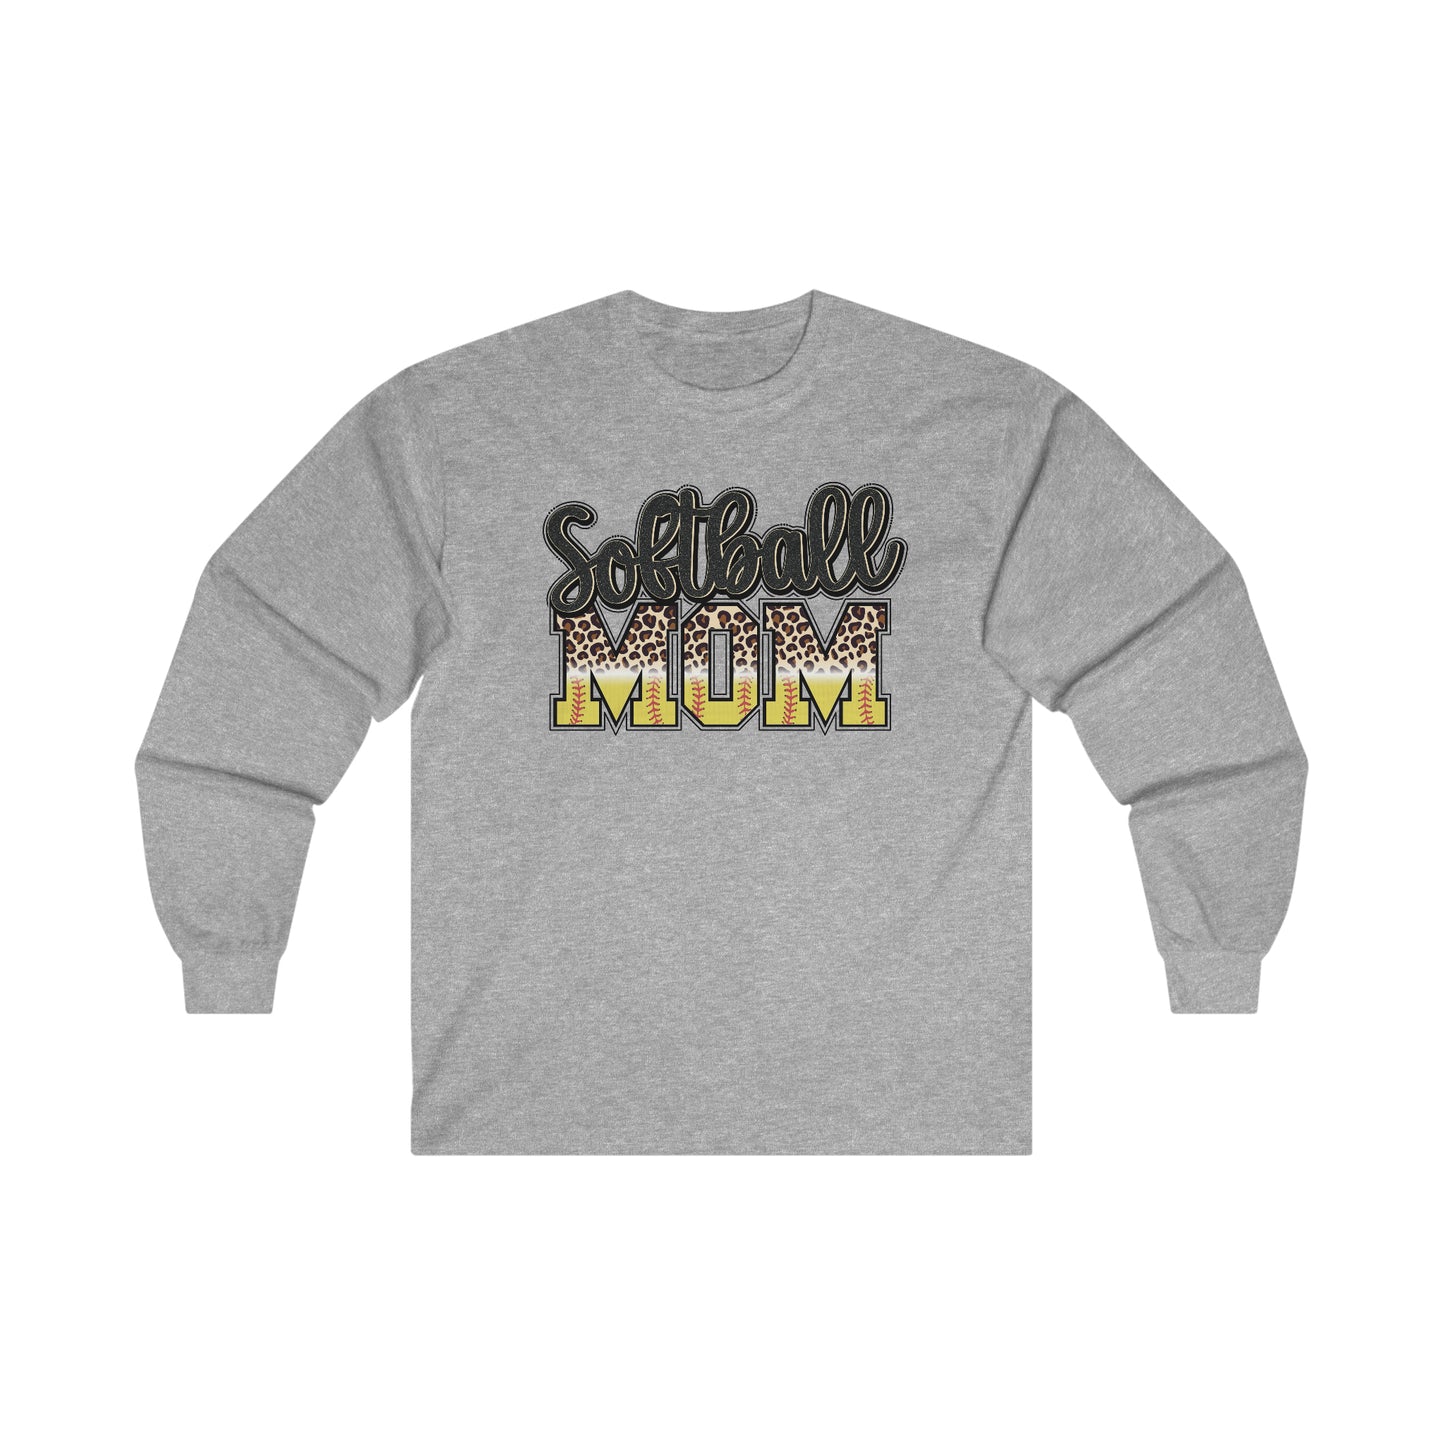 Unisex Ultra Cotton Long Sleeve Tee - Softball Mom